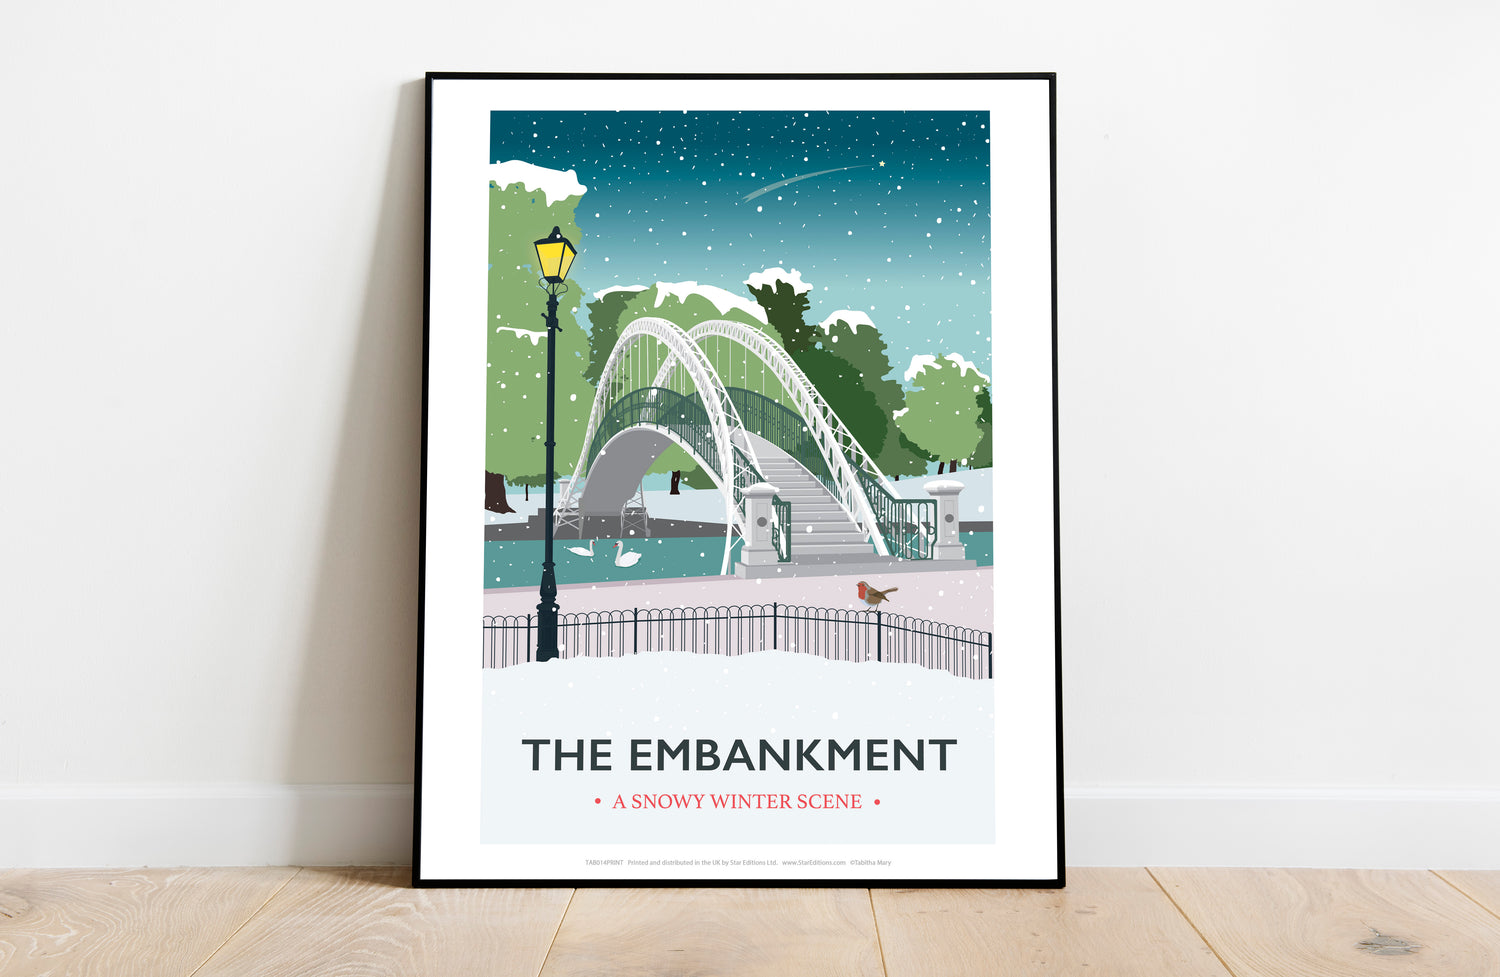 The Embankment, Bedford - Art Print